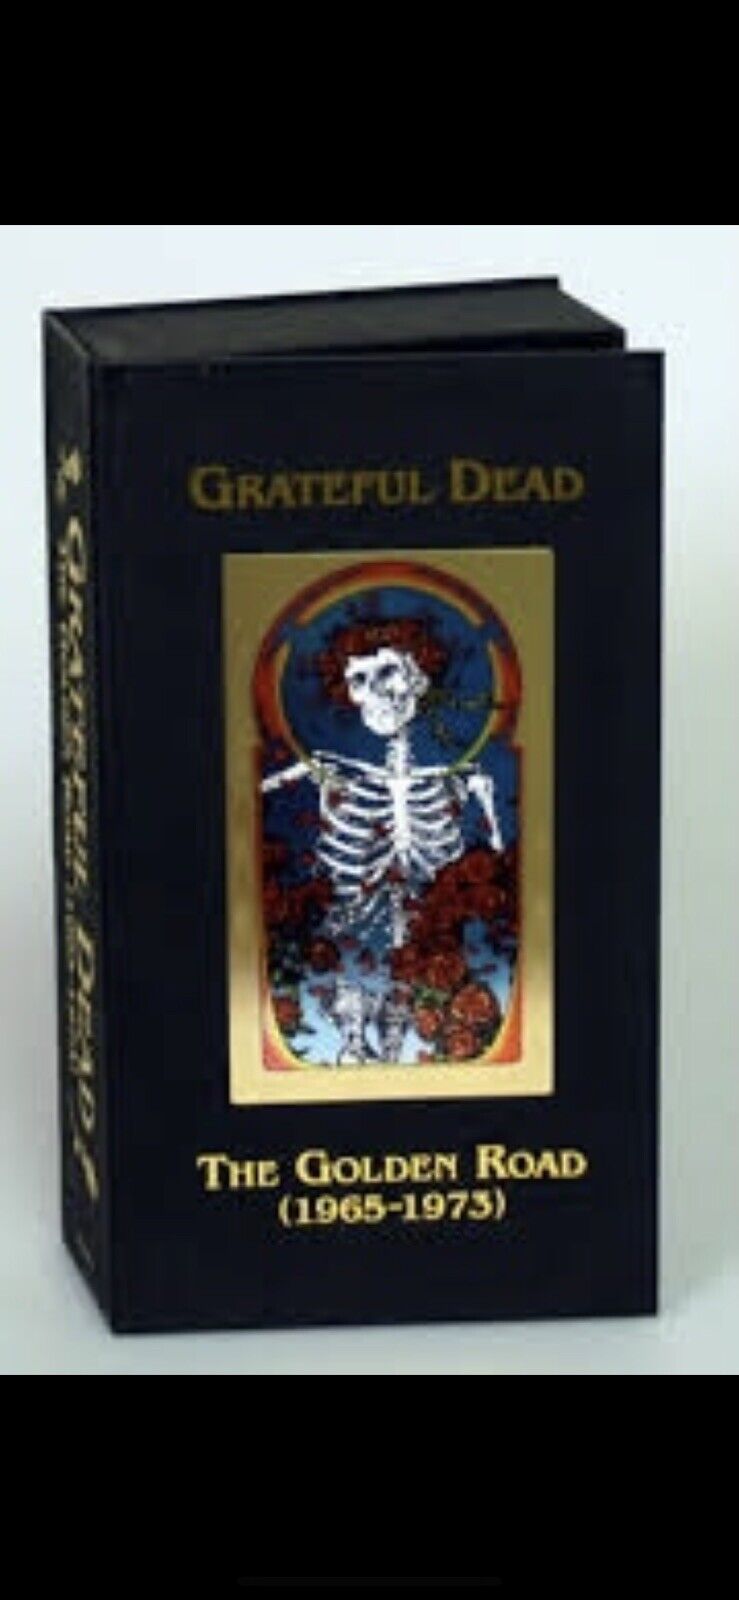 Grateful Dead The Golden Road (1965-1973) 12-CD Box Set, 2001 